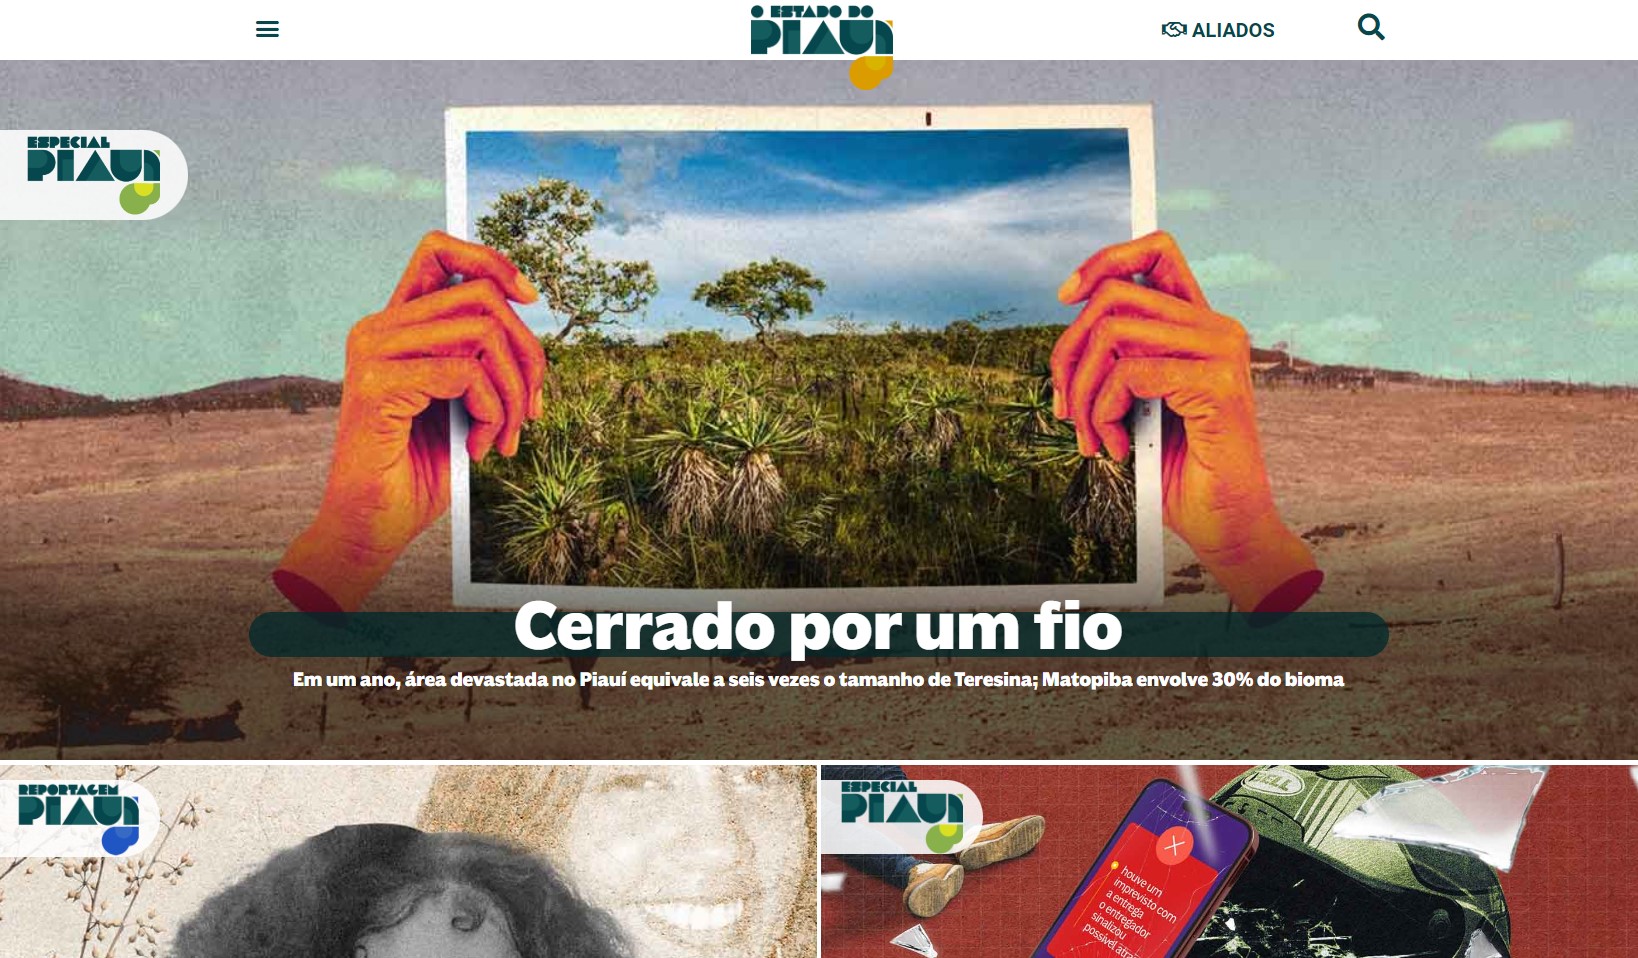 O Estado do Piauí